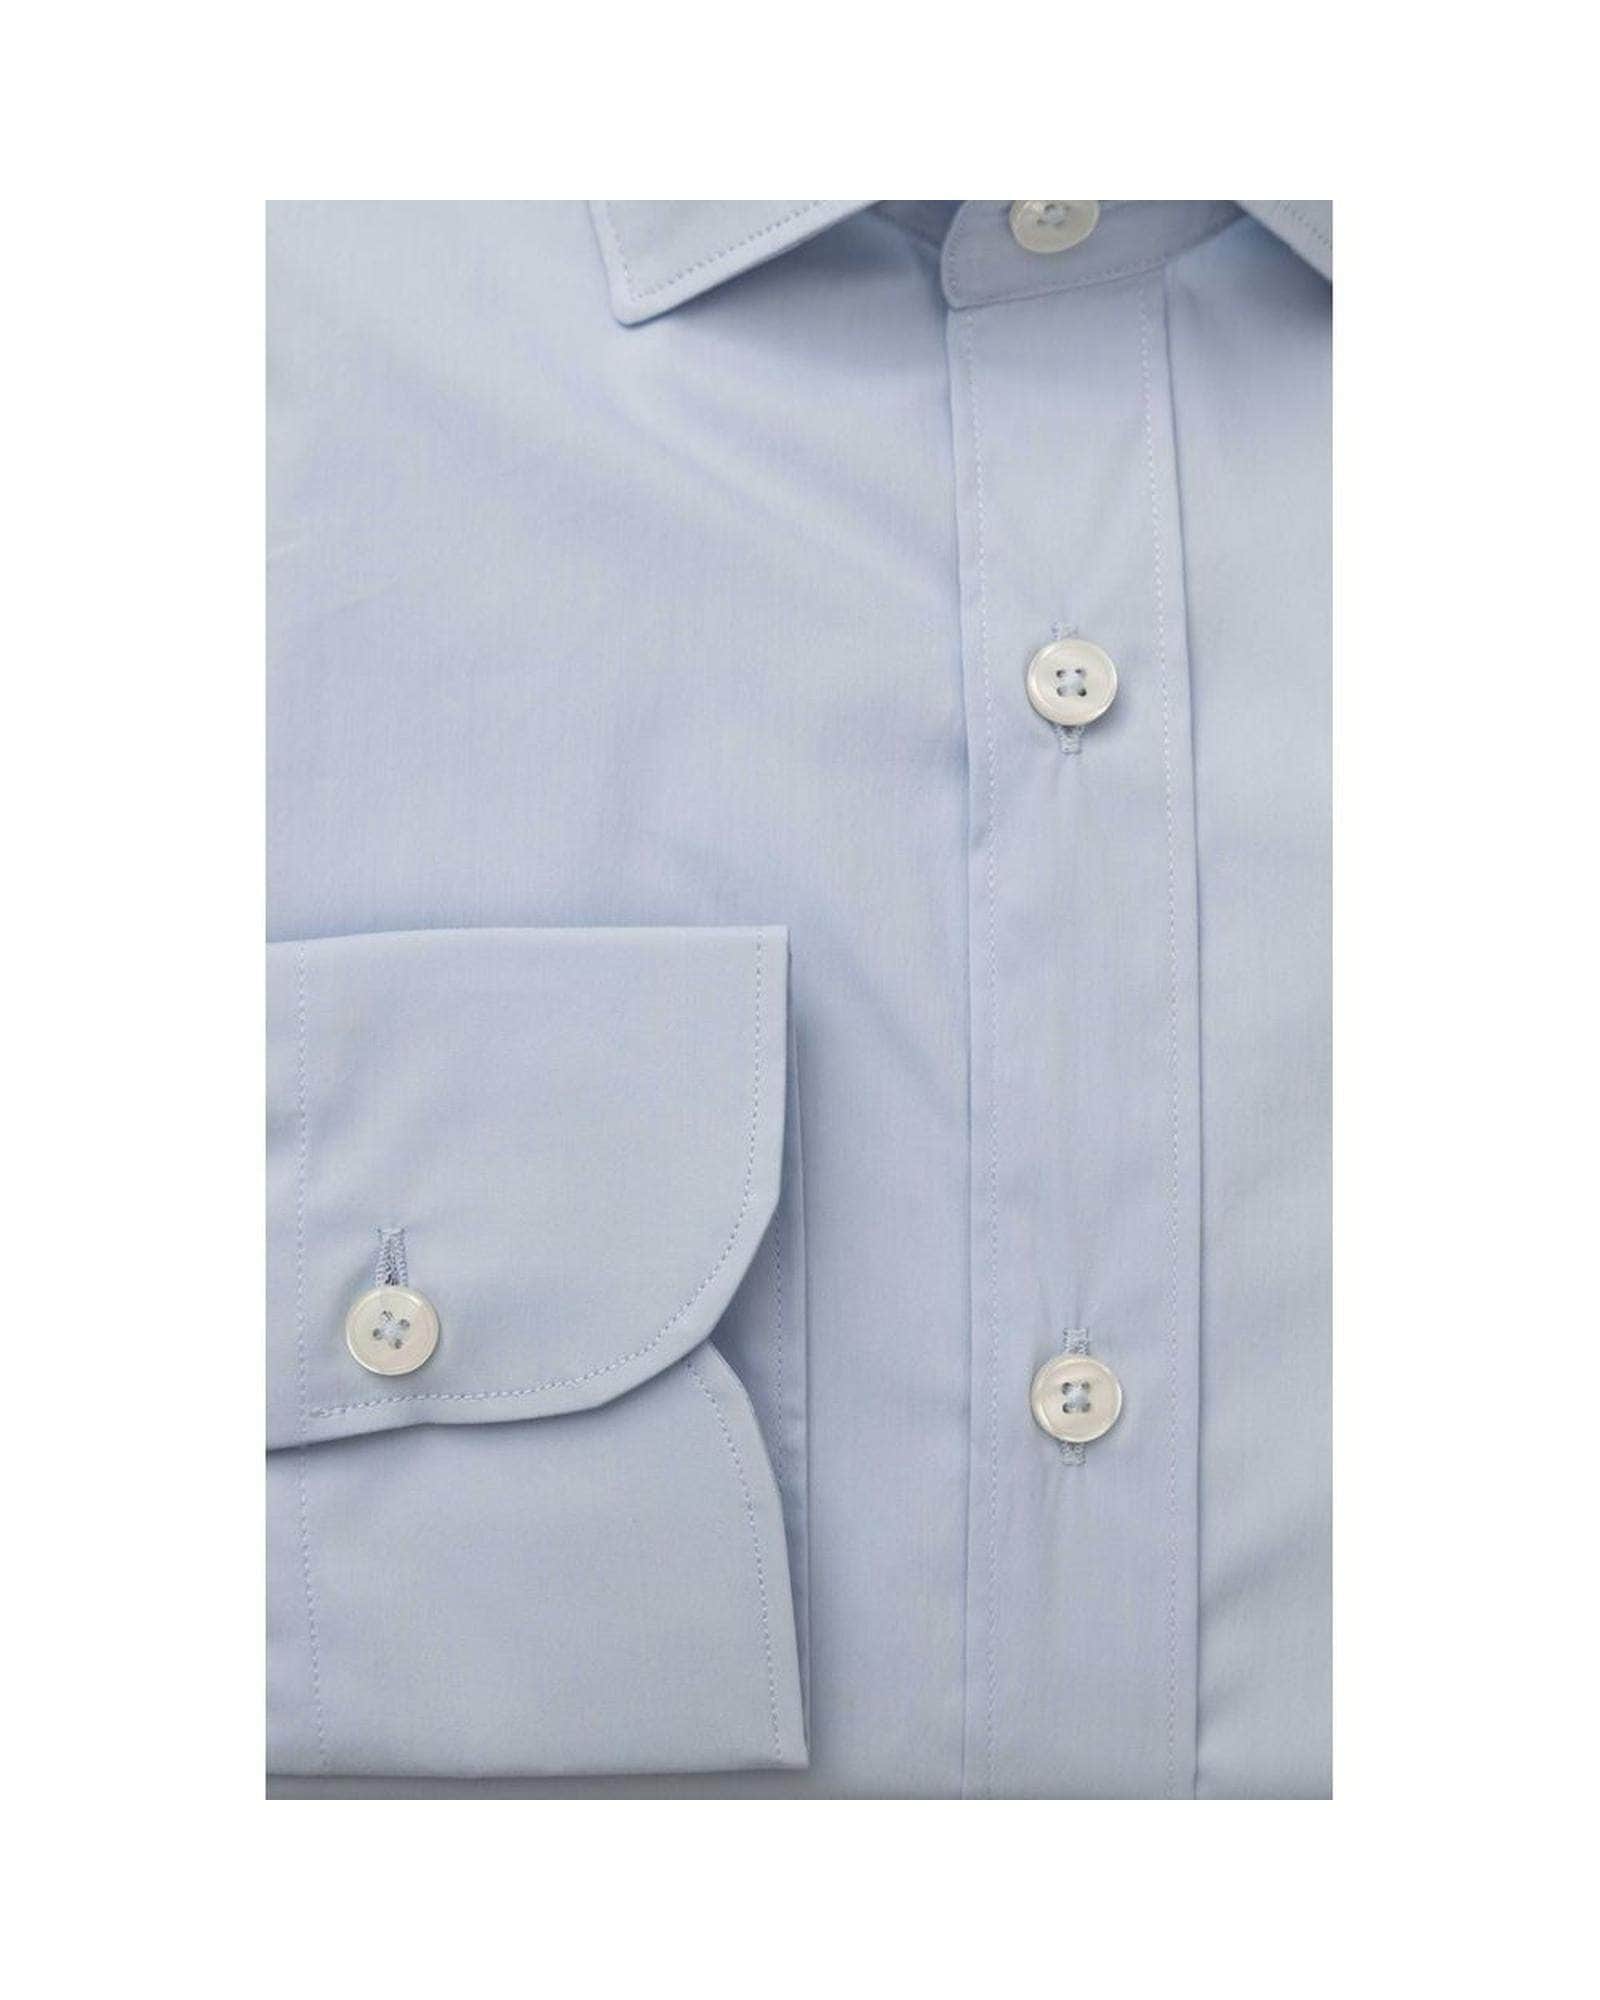 Bagutta Blue/Black/Light Blue Men's Cotton Shirt